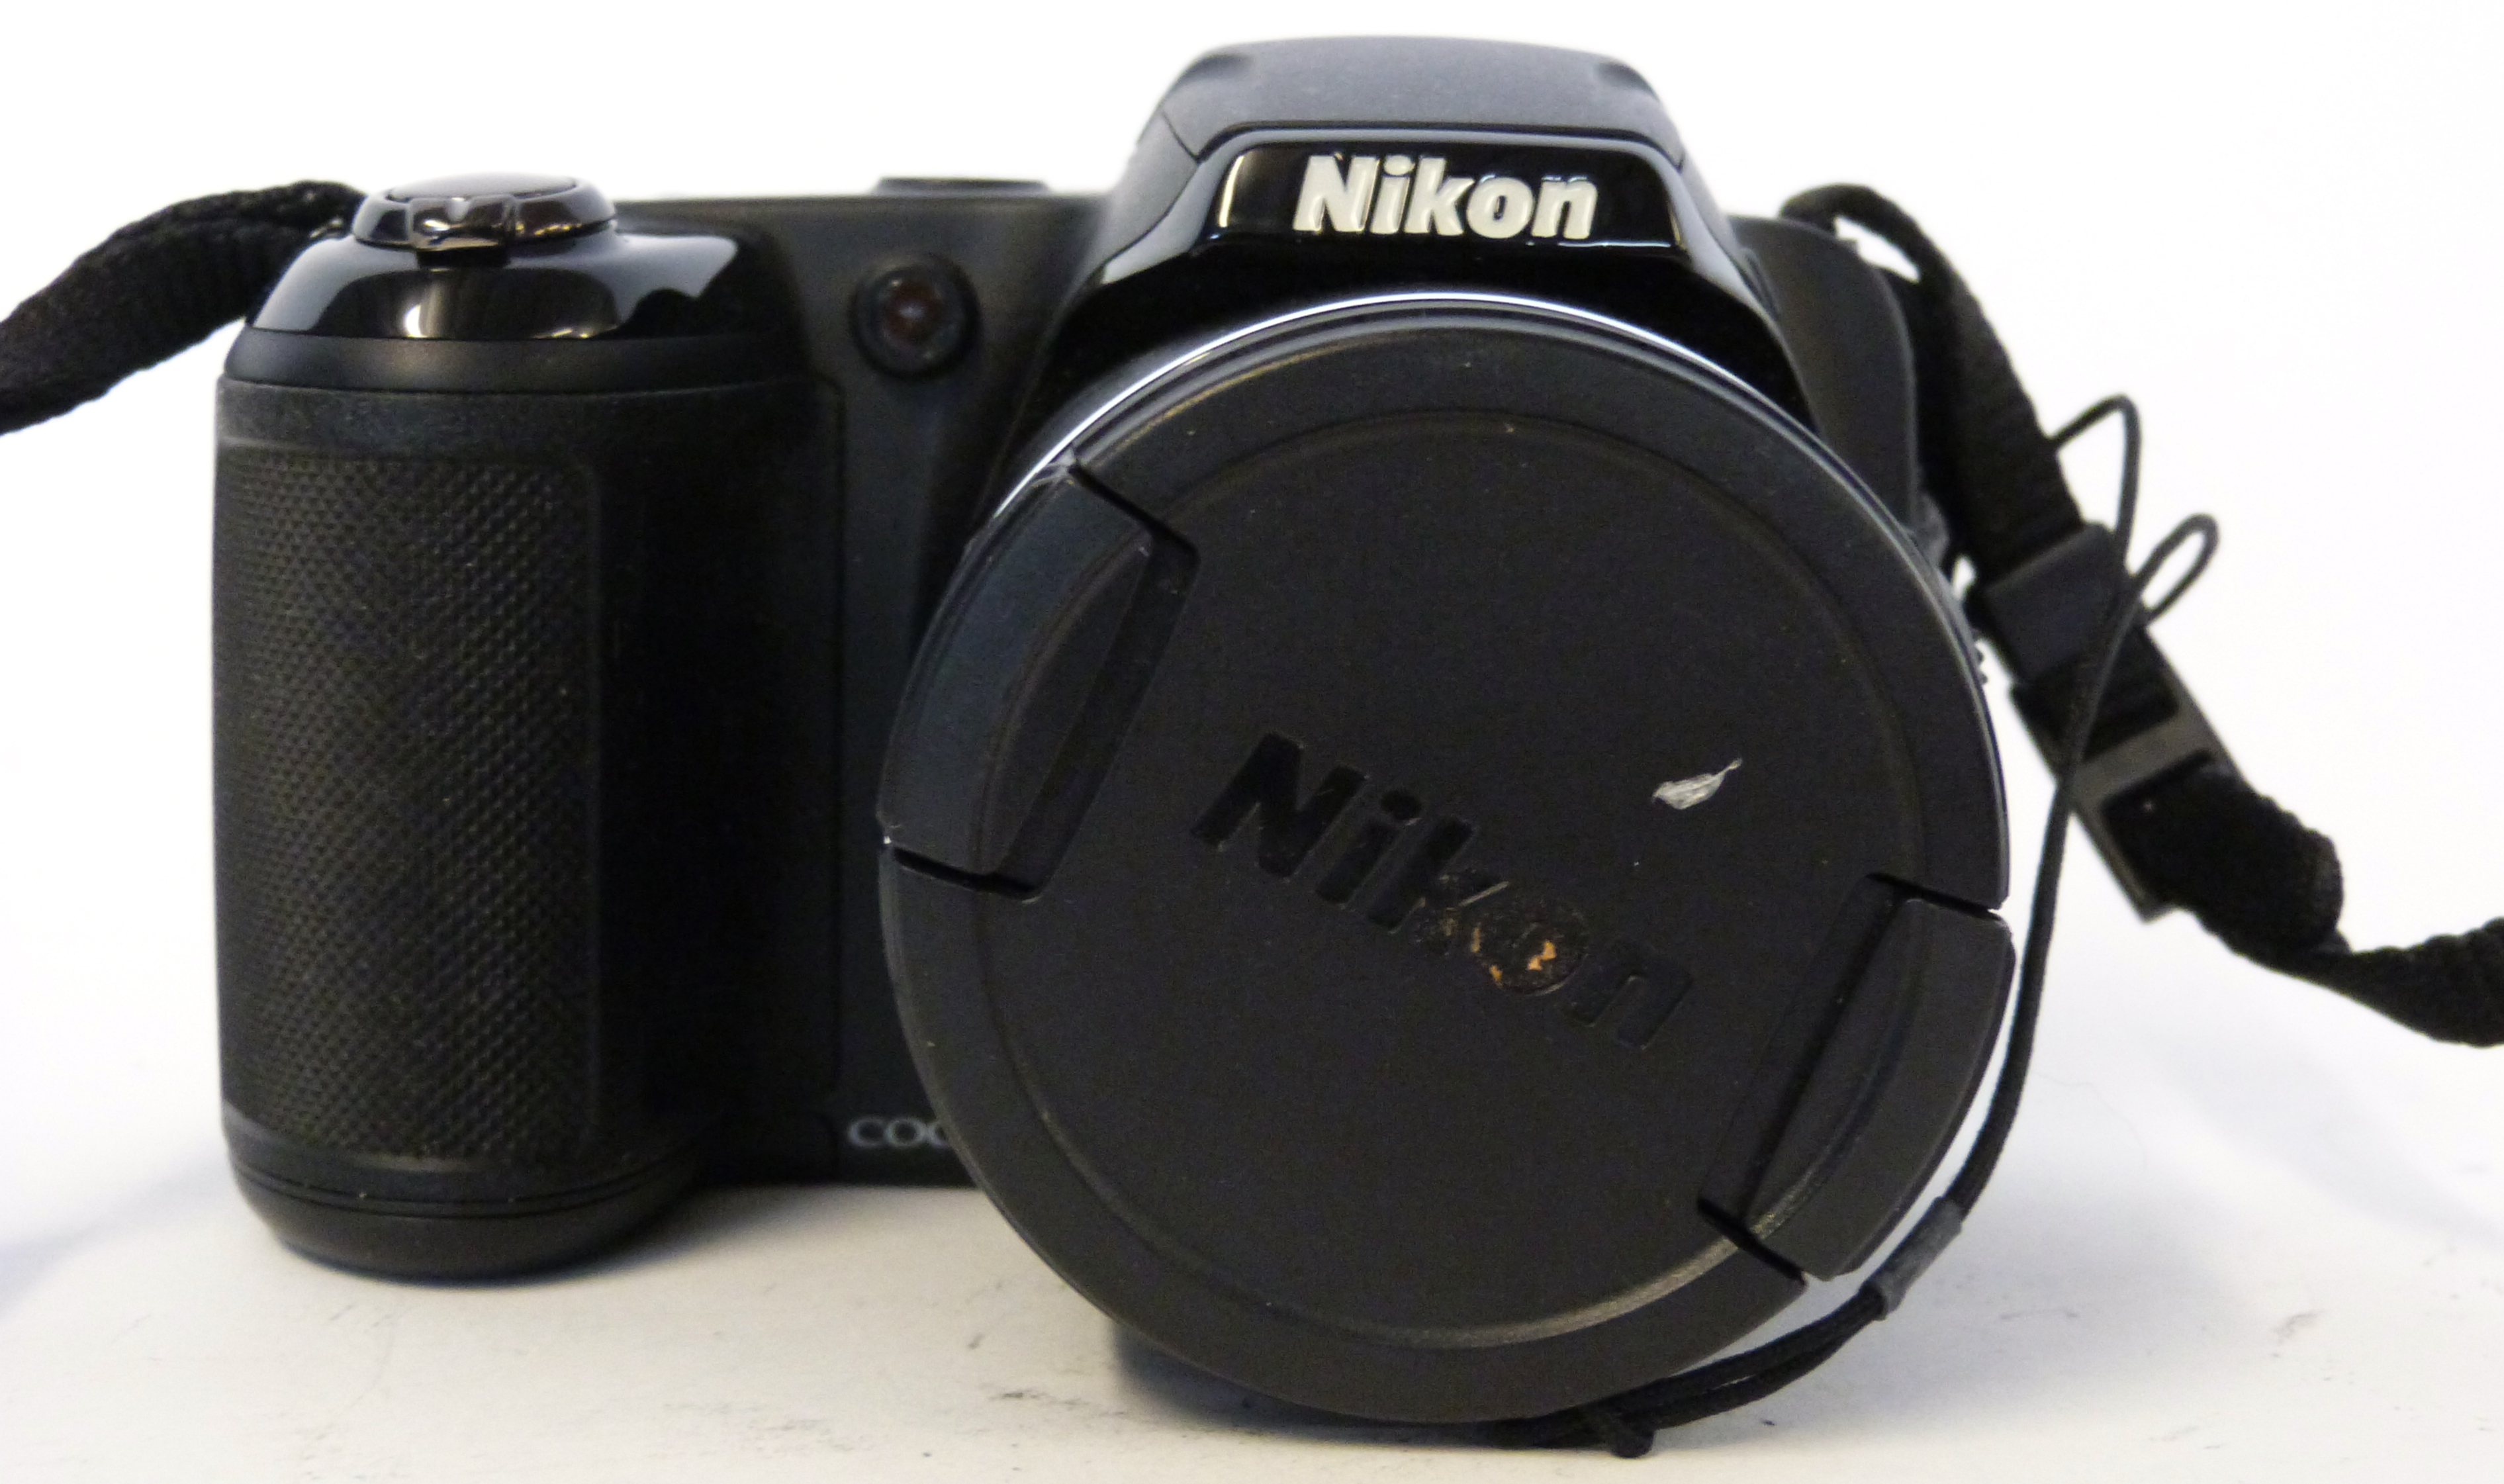 Nikon Coolpix L810 digital camera plus manual and charger - Image 3 of 5